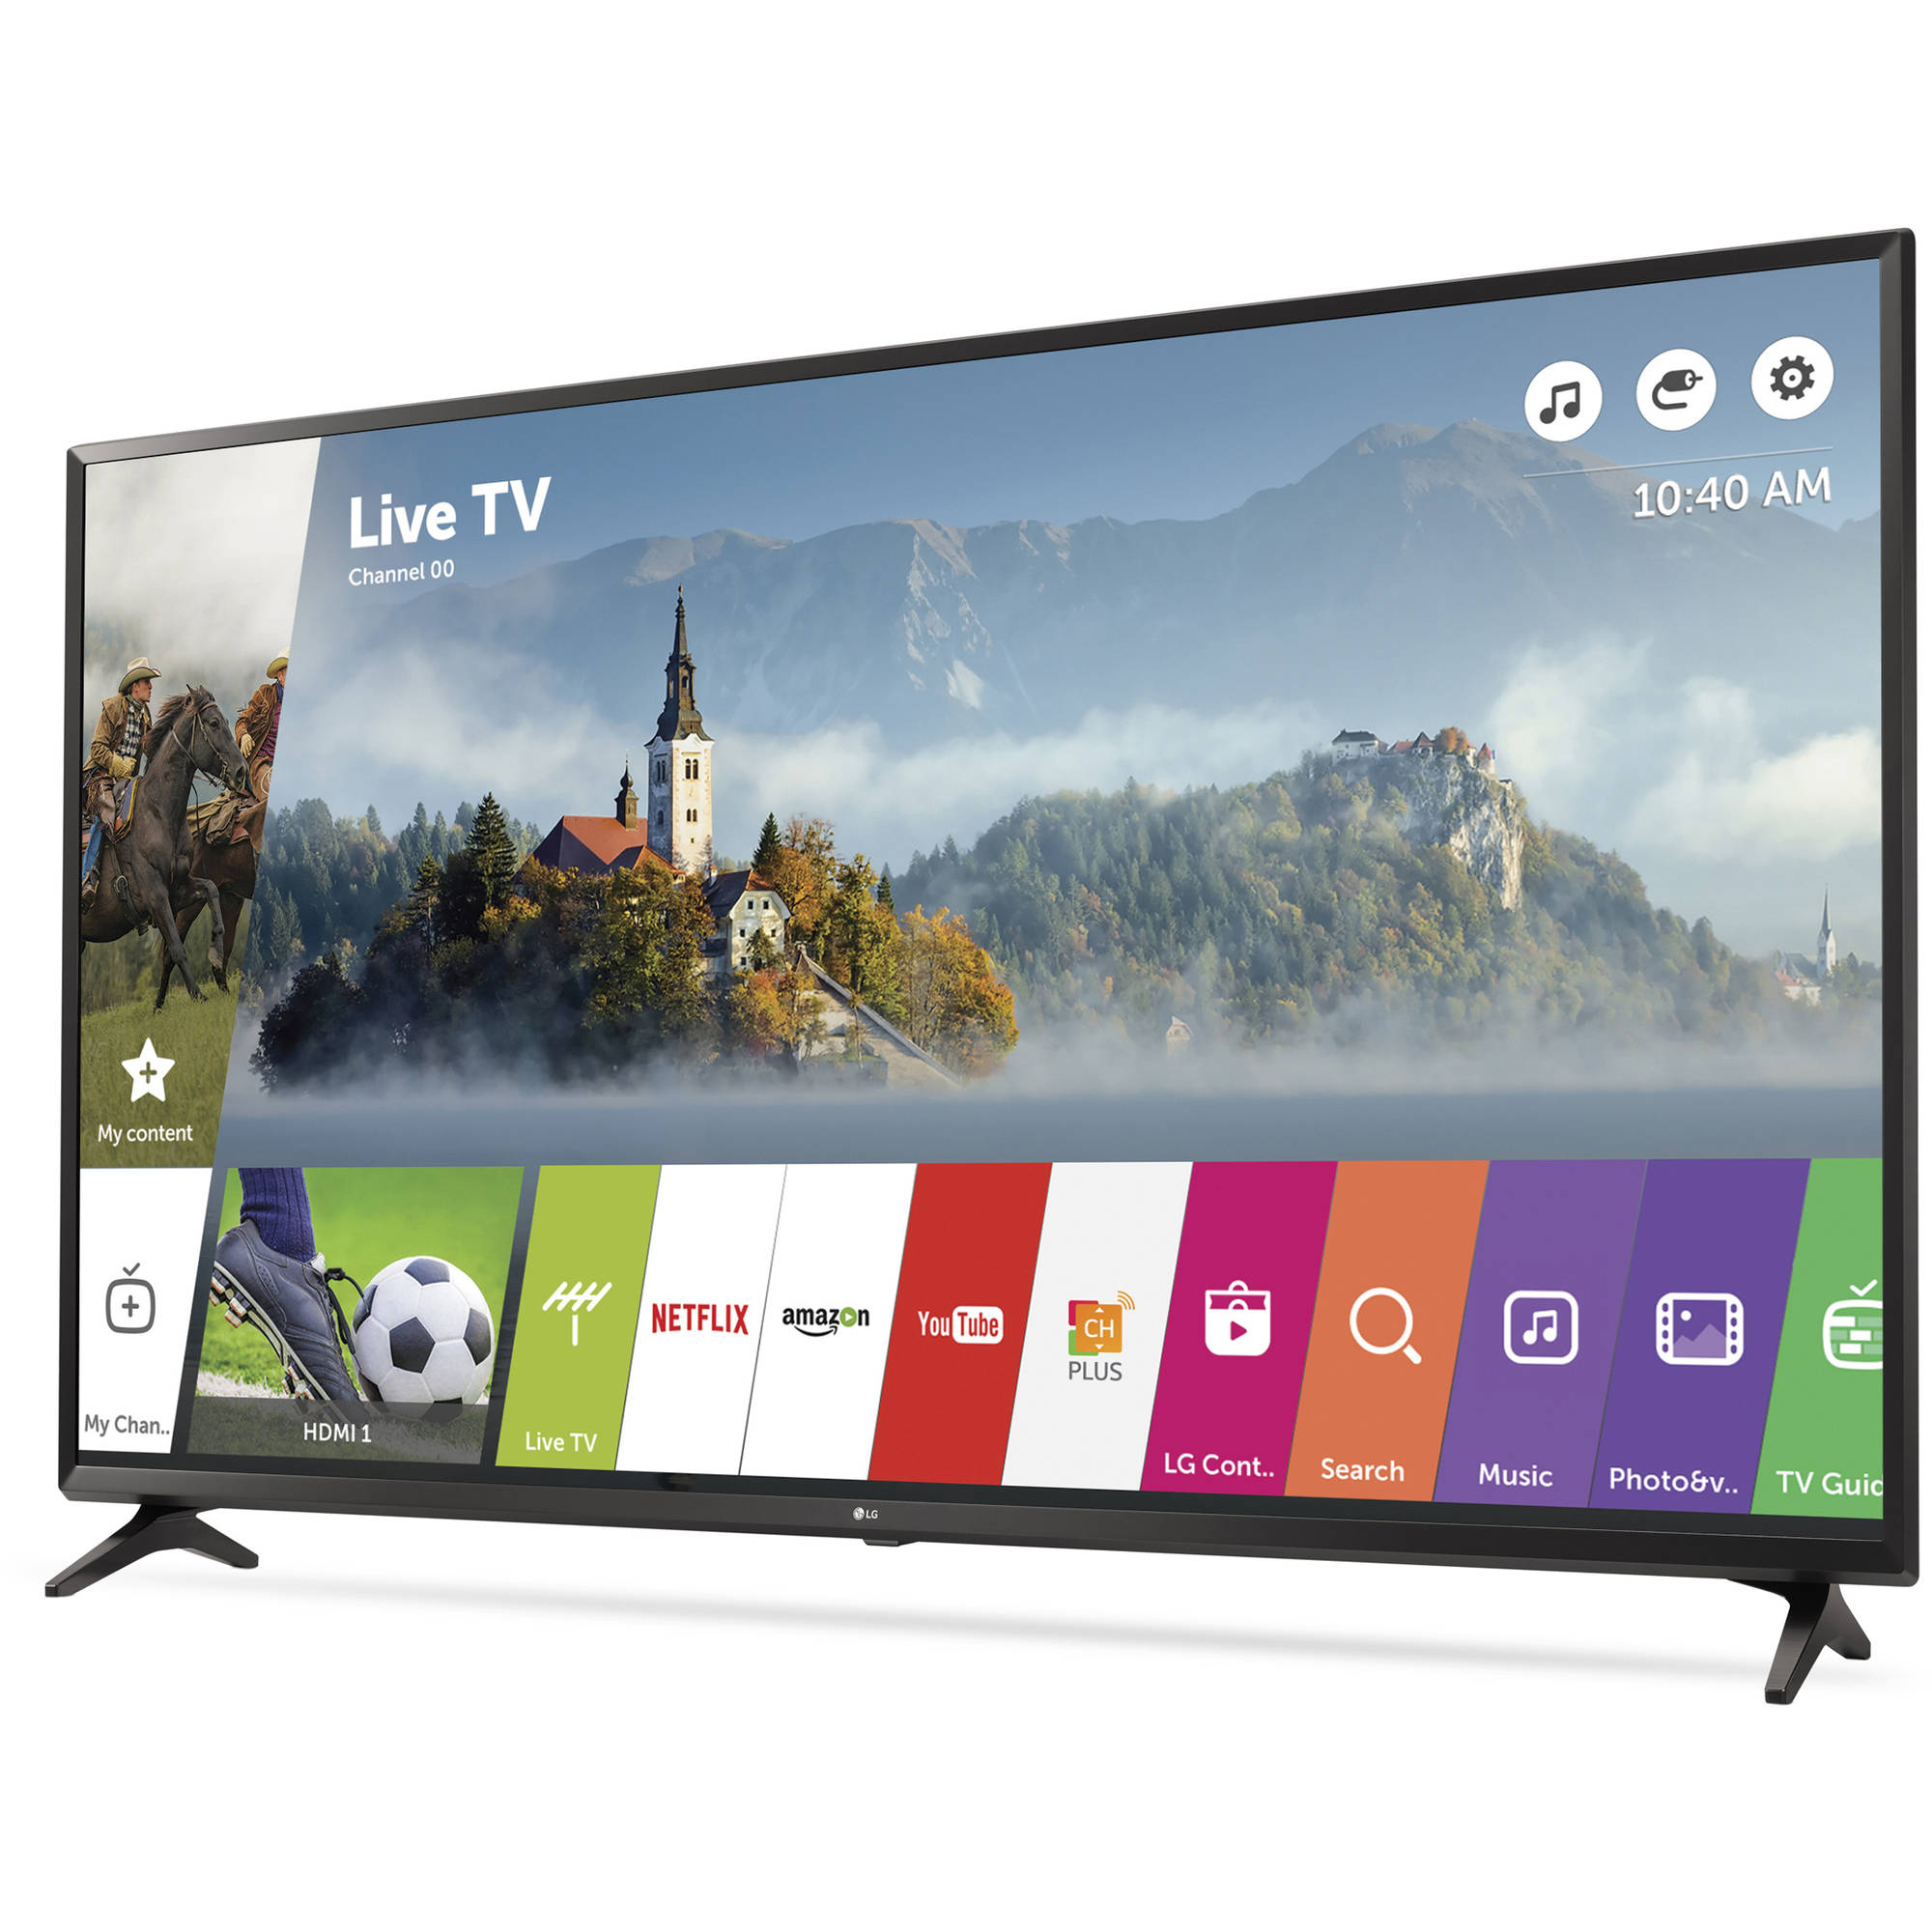 LG 49" Class 4K Ultra HD (2160P) Smart LED TV (49UJ6300) - image 3 of 12